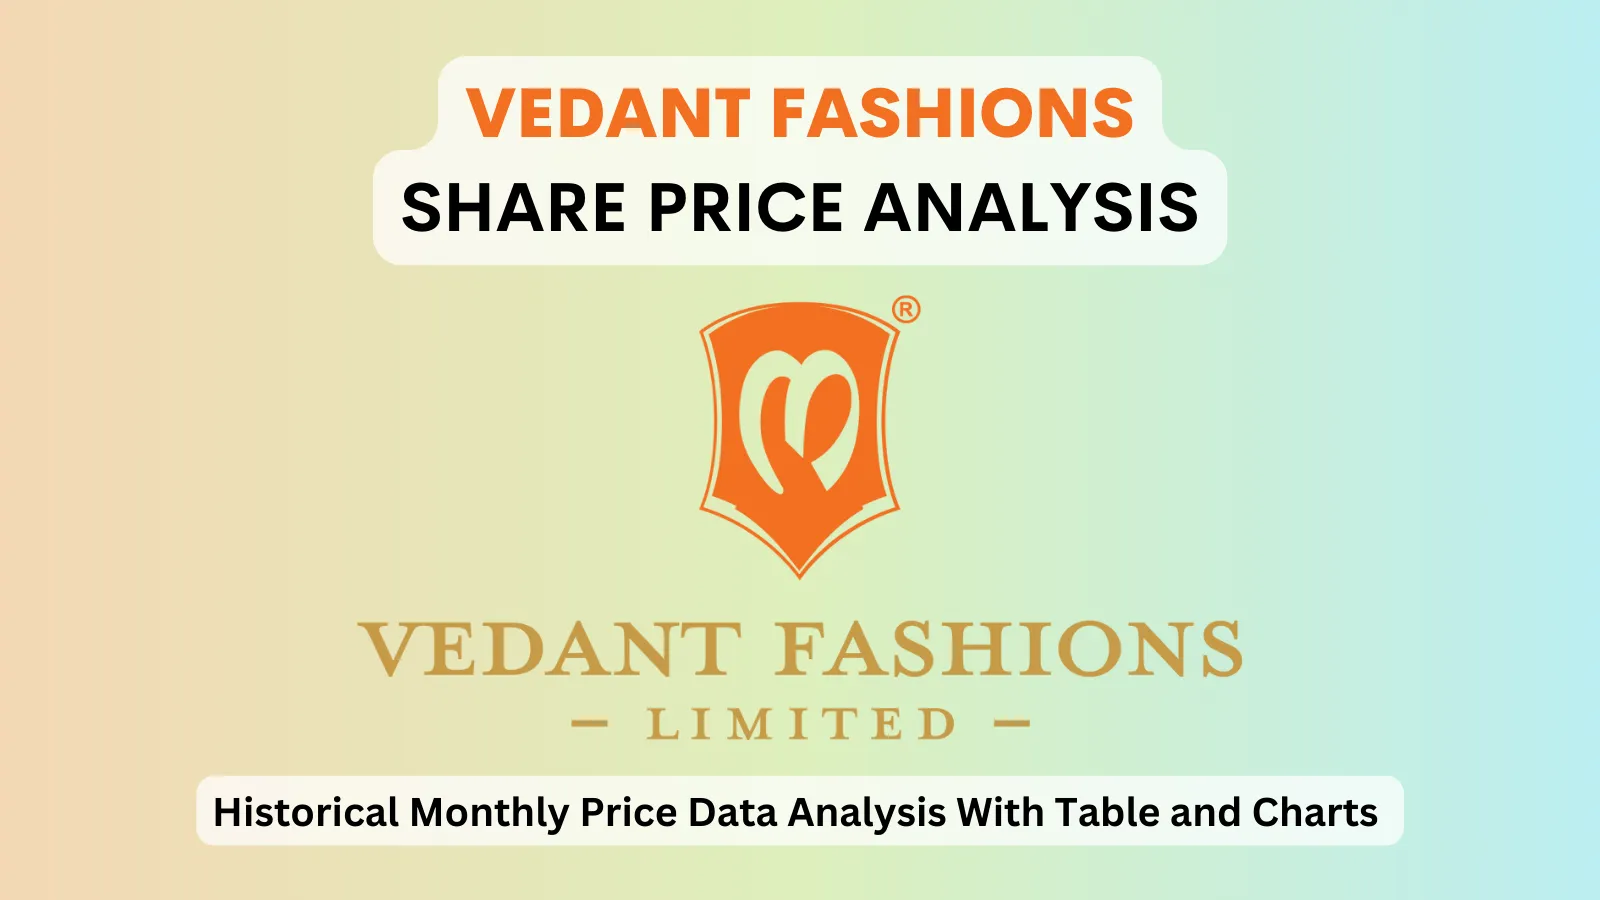 Vedant Fashions share price analysis